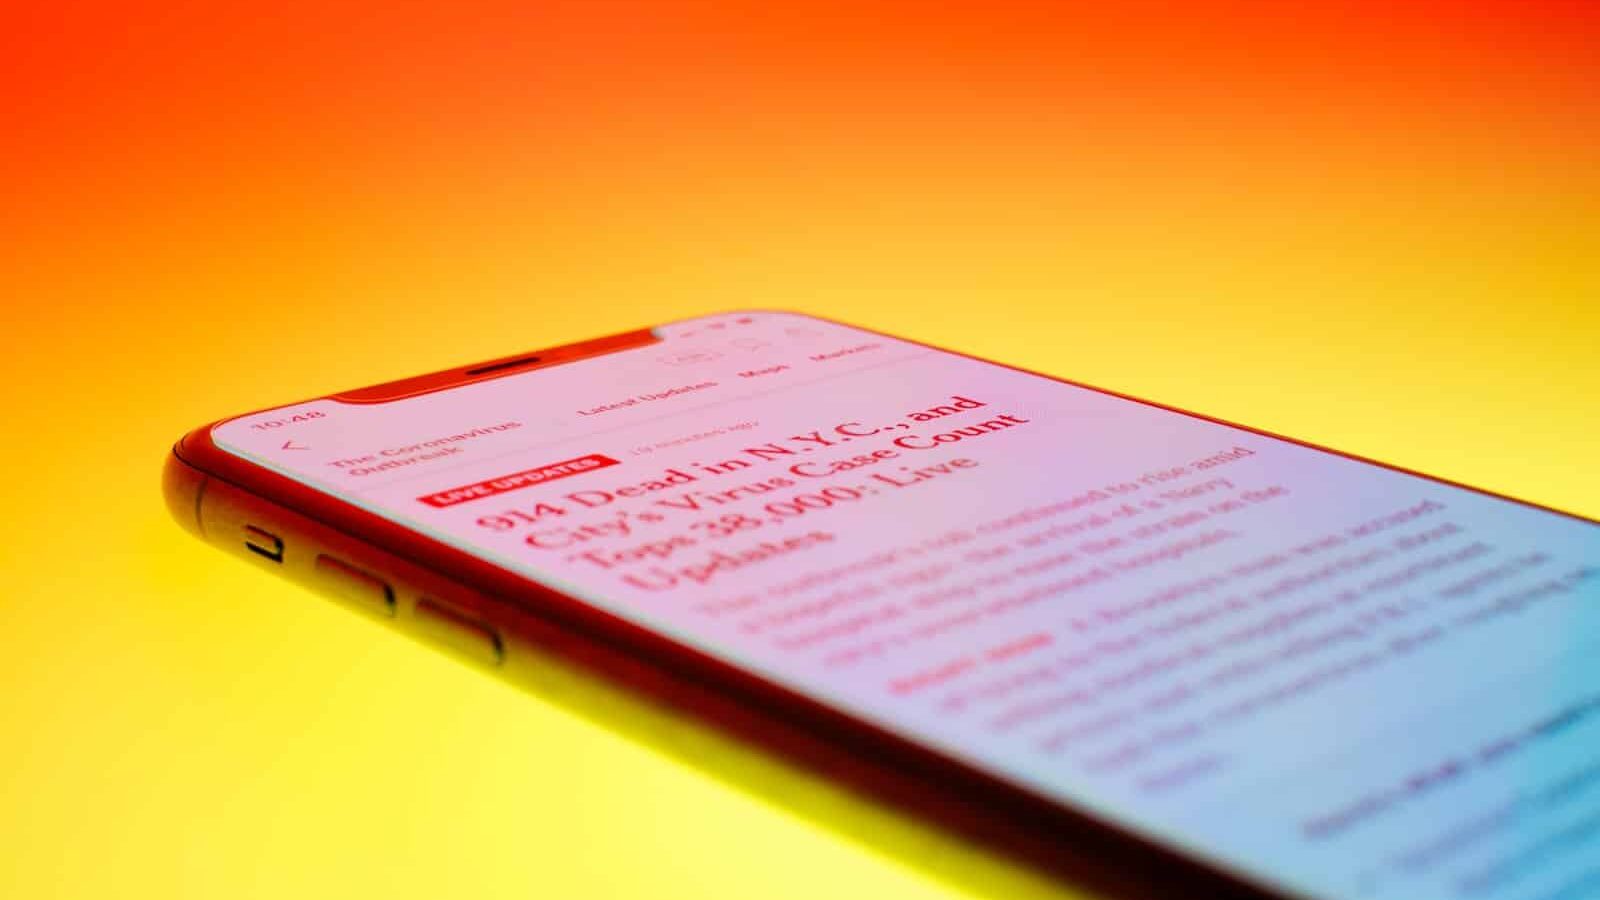 black android smartphone on orange surface